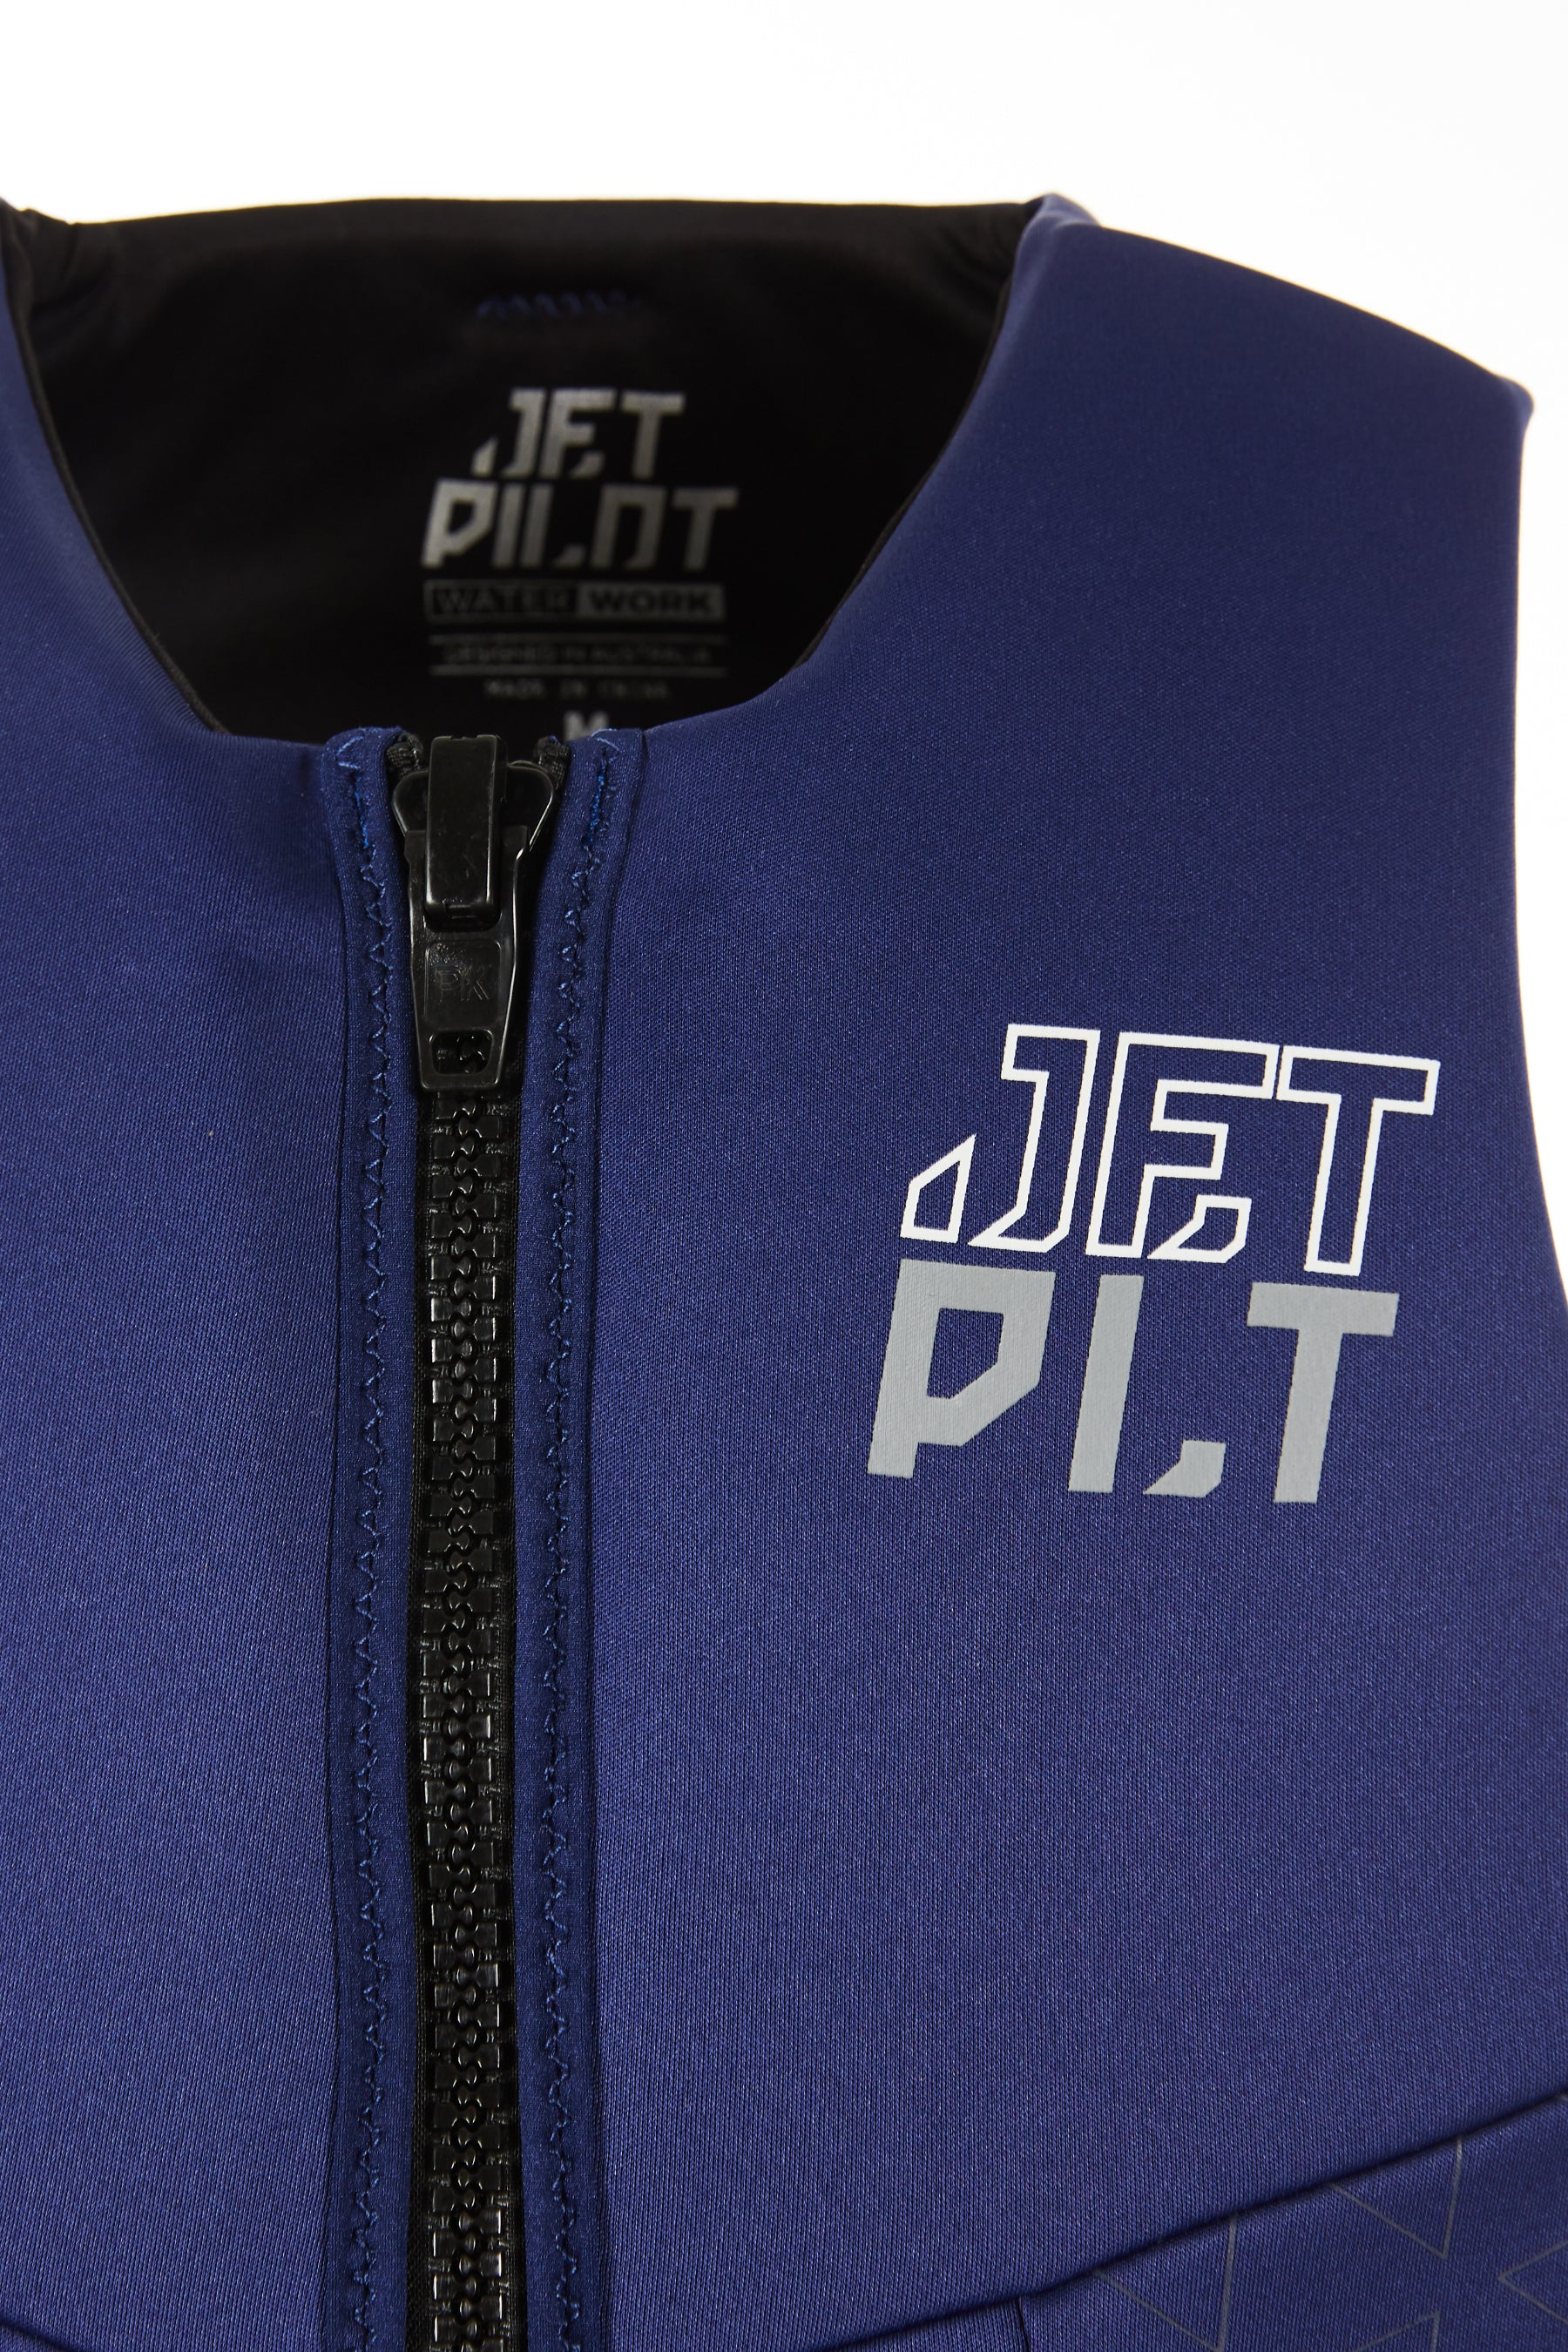 Jetpilot Cause Mens Neo Life Jacket - L50S NAVY